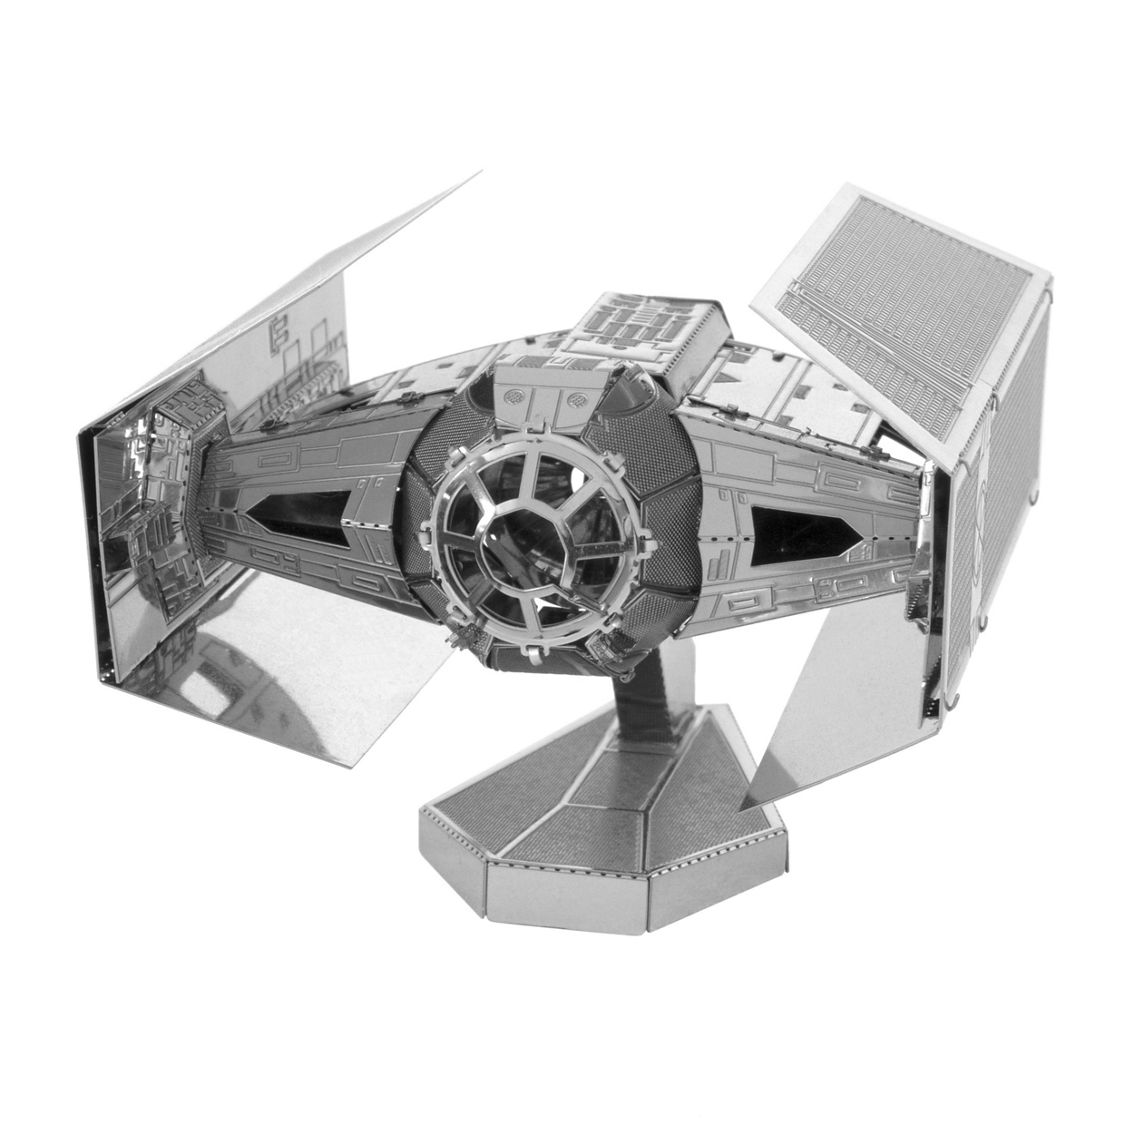 Fascinations Metal Earth 3D Metal Model Kit - Star Wars: Darth Vader's TIE Fighter - Image 2 of 2